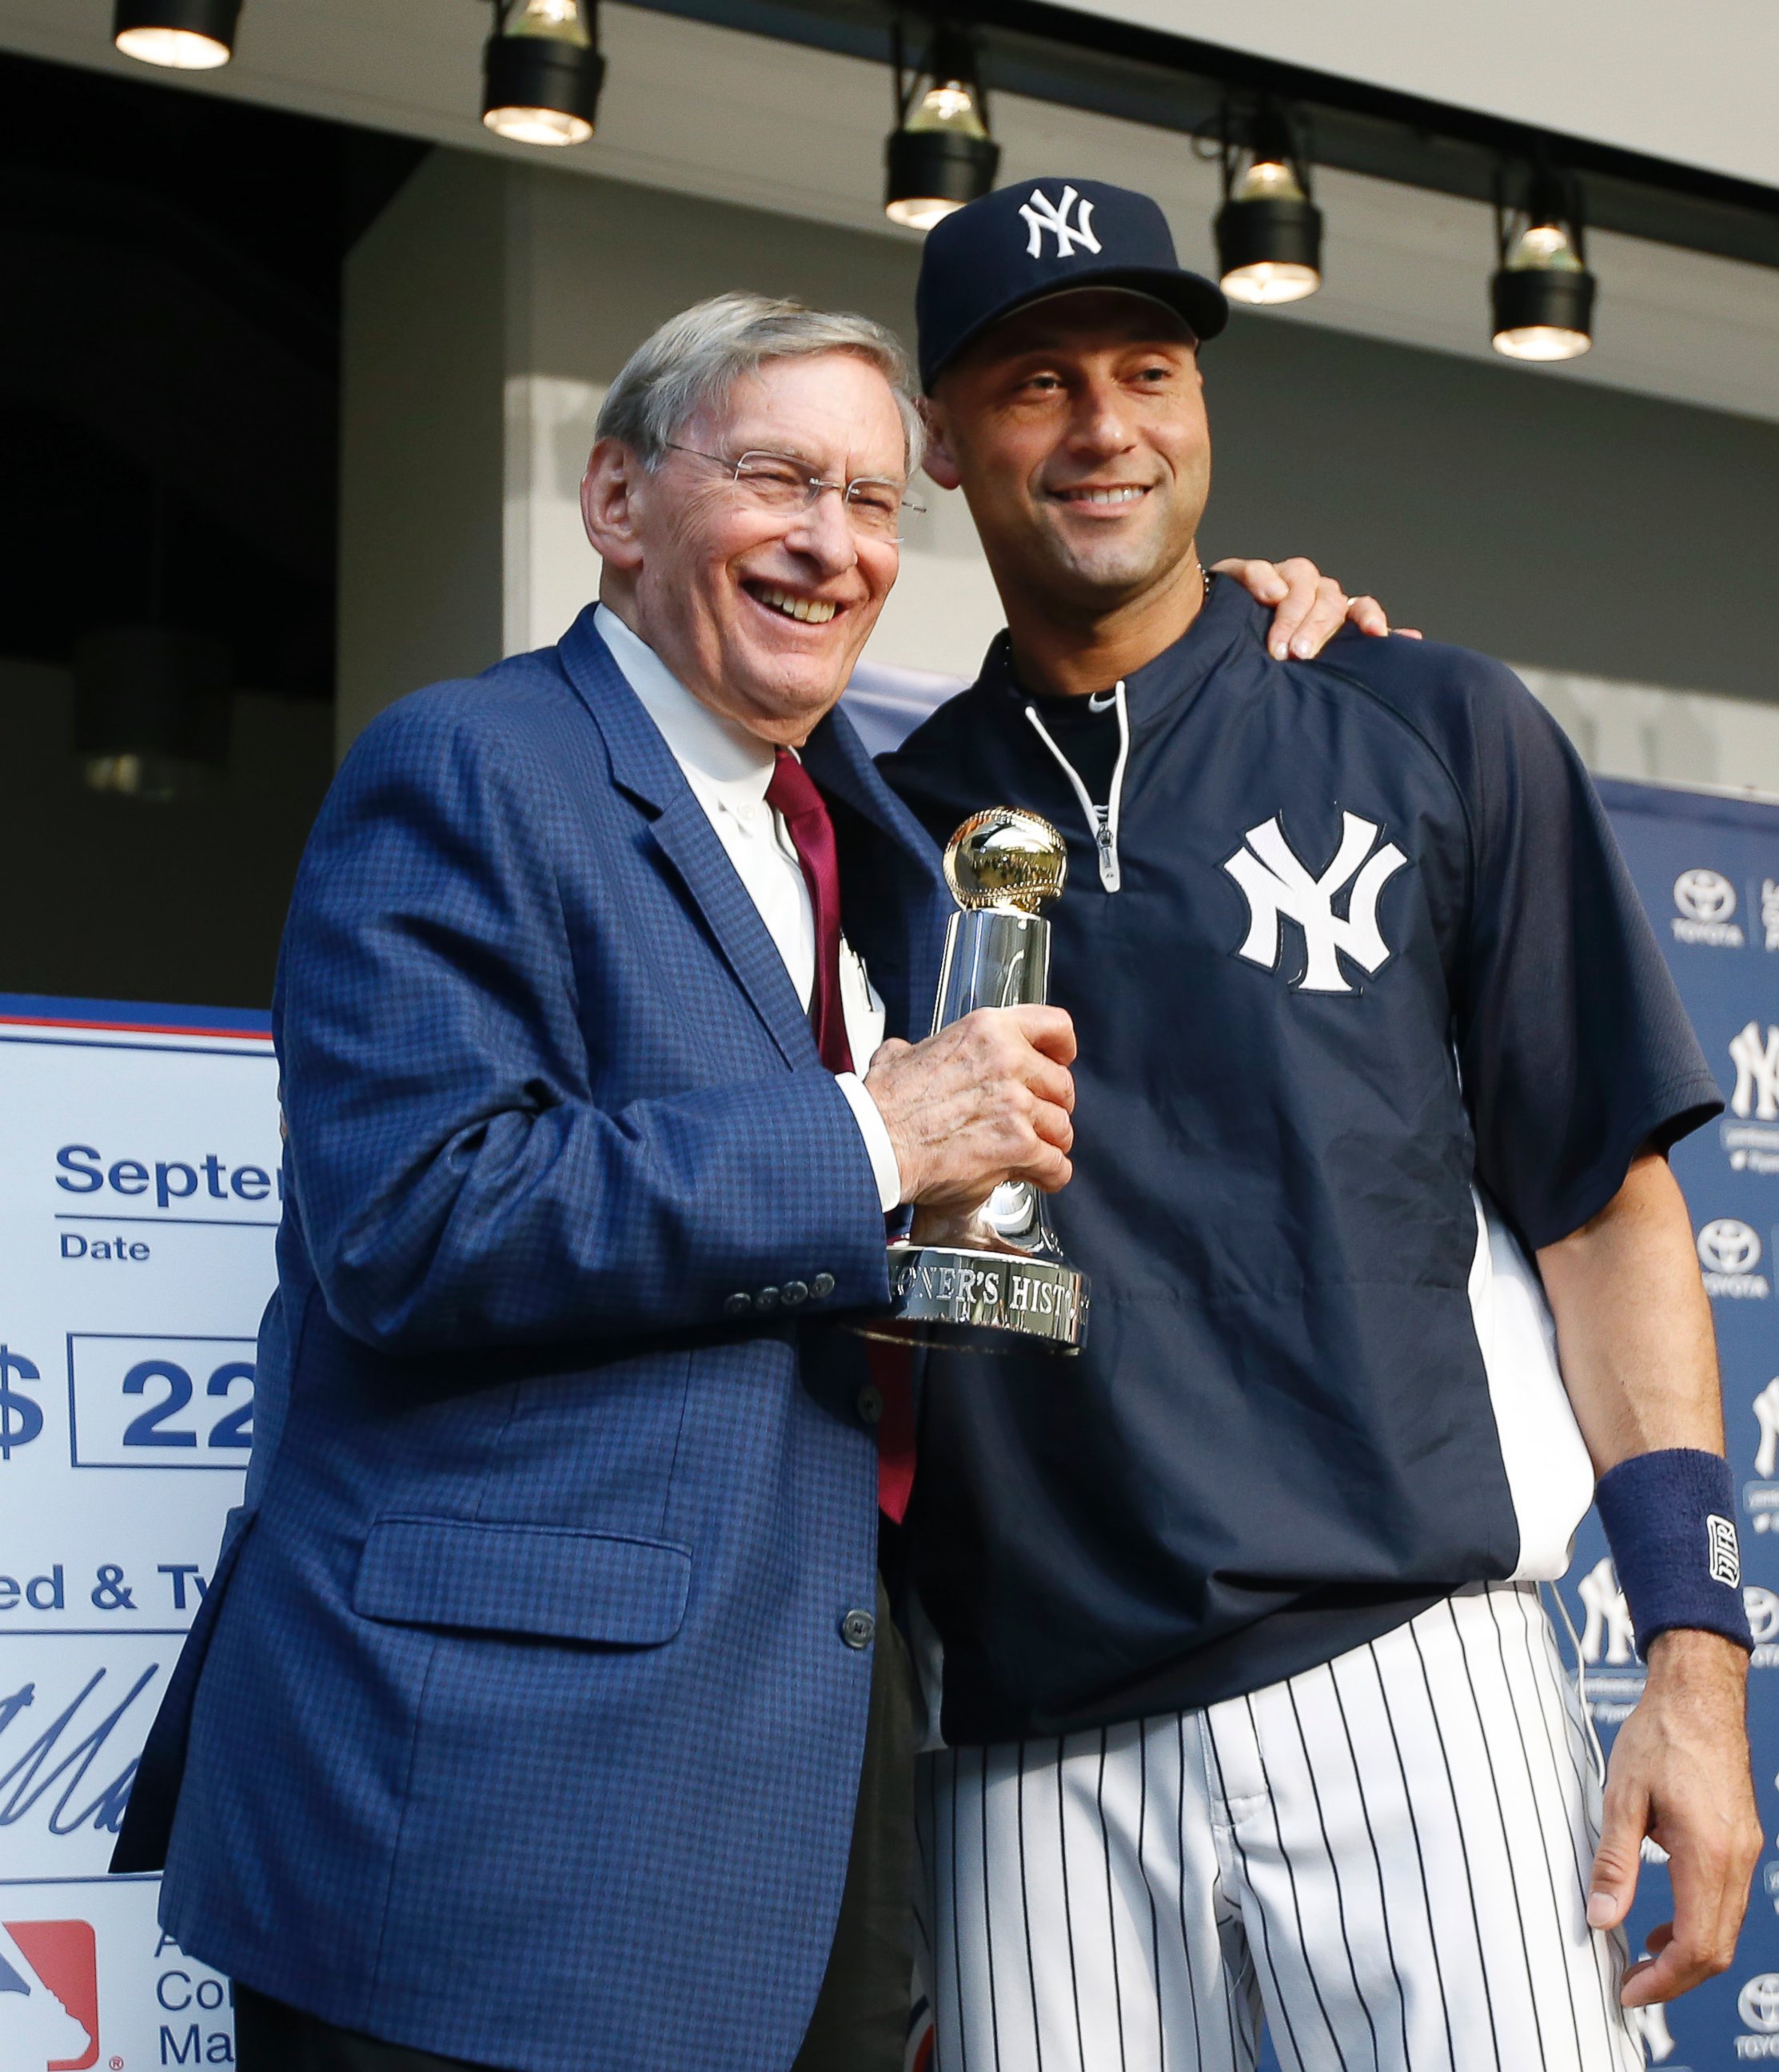 PHOTO: From left, Major League Baseball Commissioner Bud Selig poses with Derek Jeter 